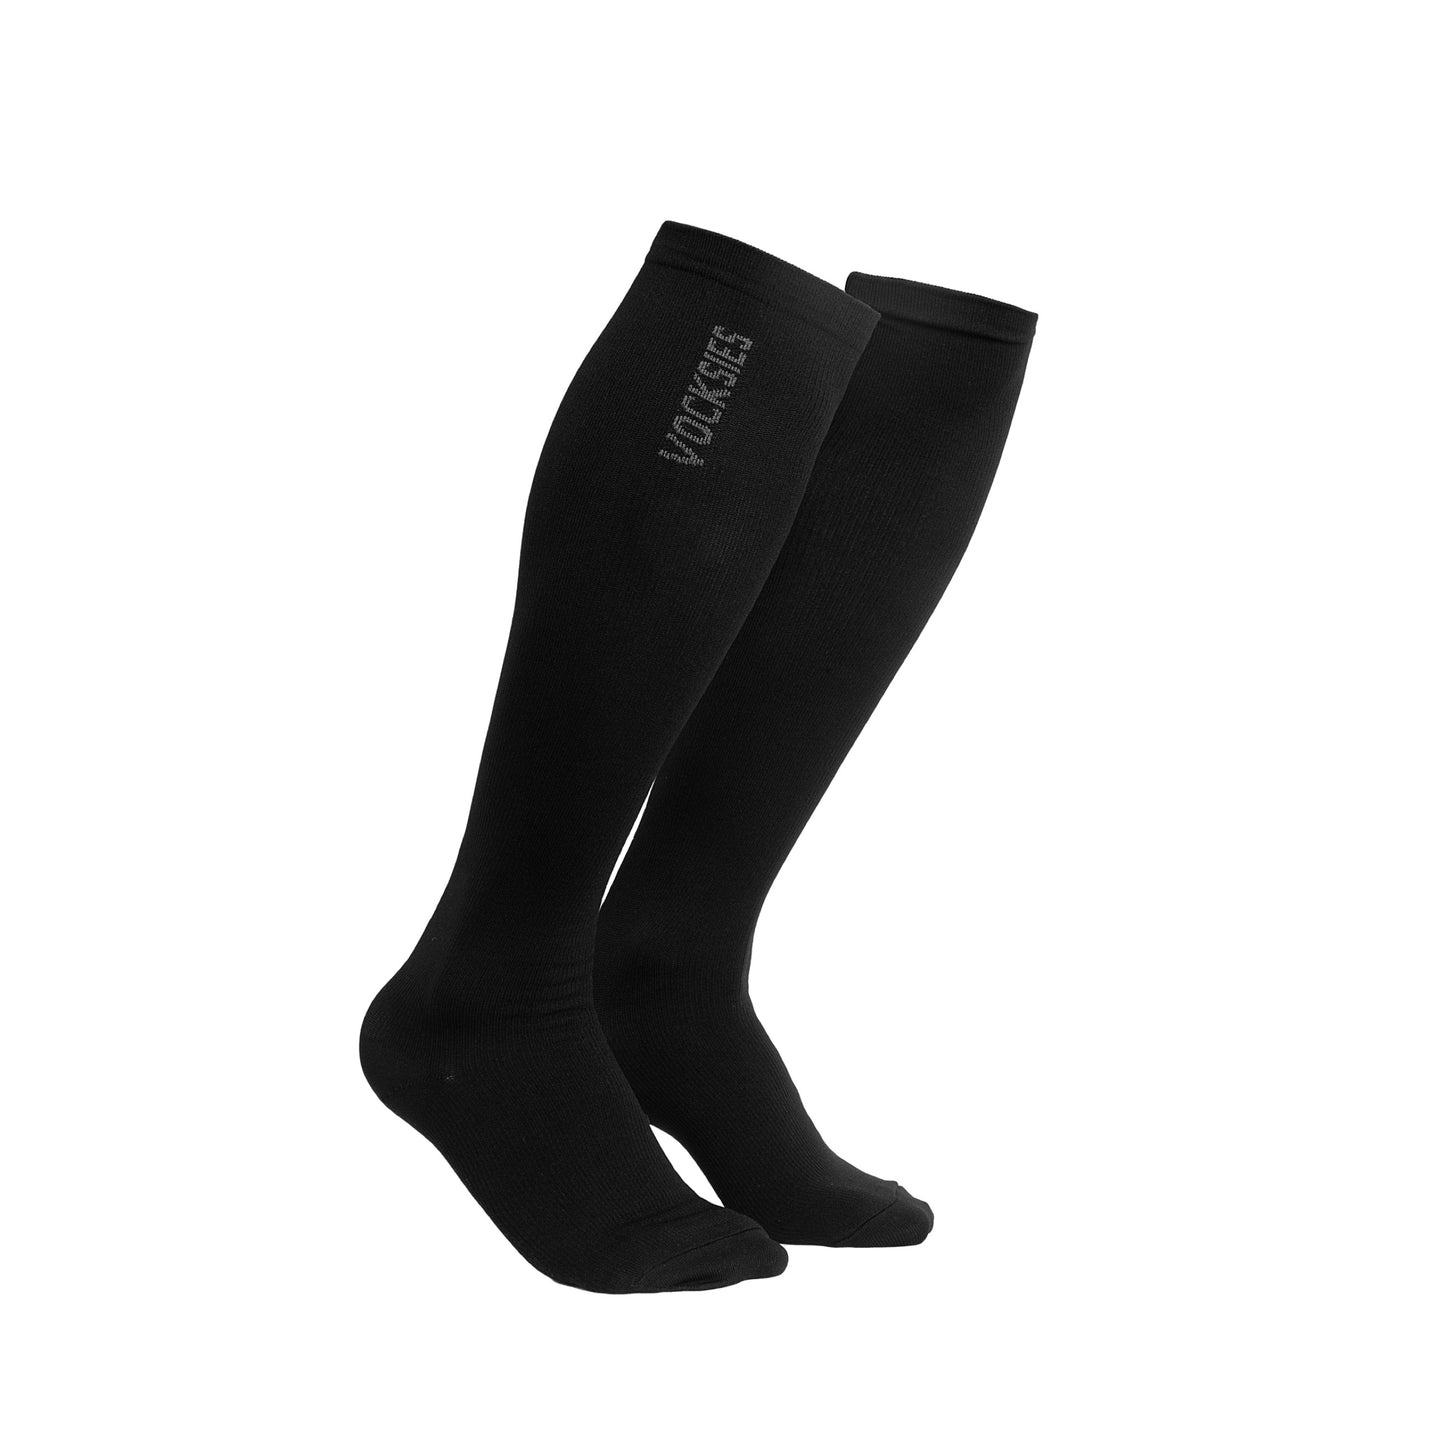 vocksies compression travel socks for pilots and travellers, compression socks for everyday use, black socks, airplane on sole 